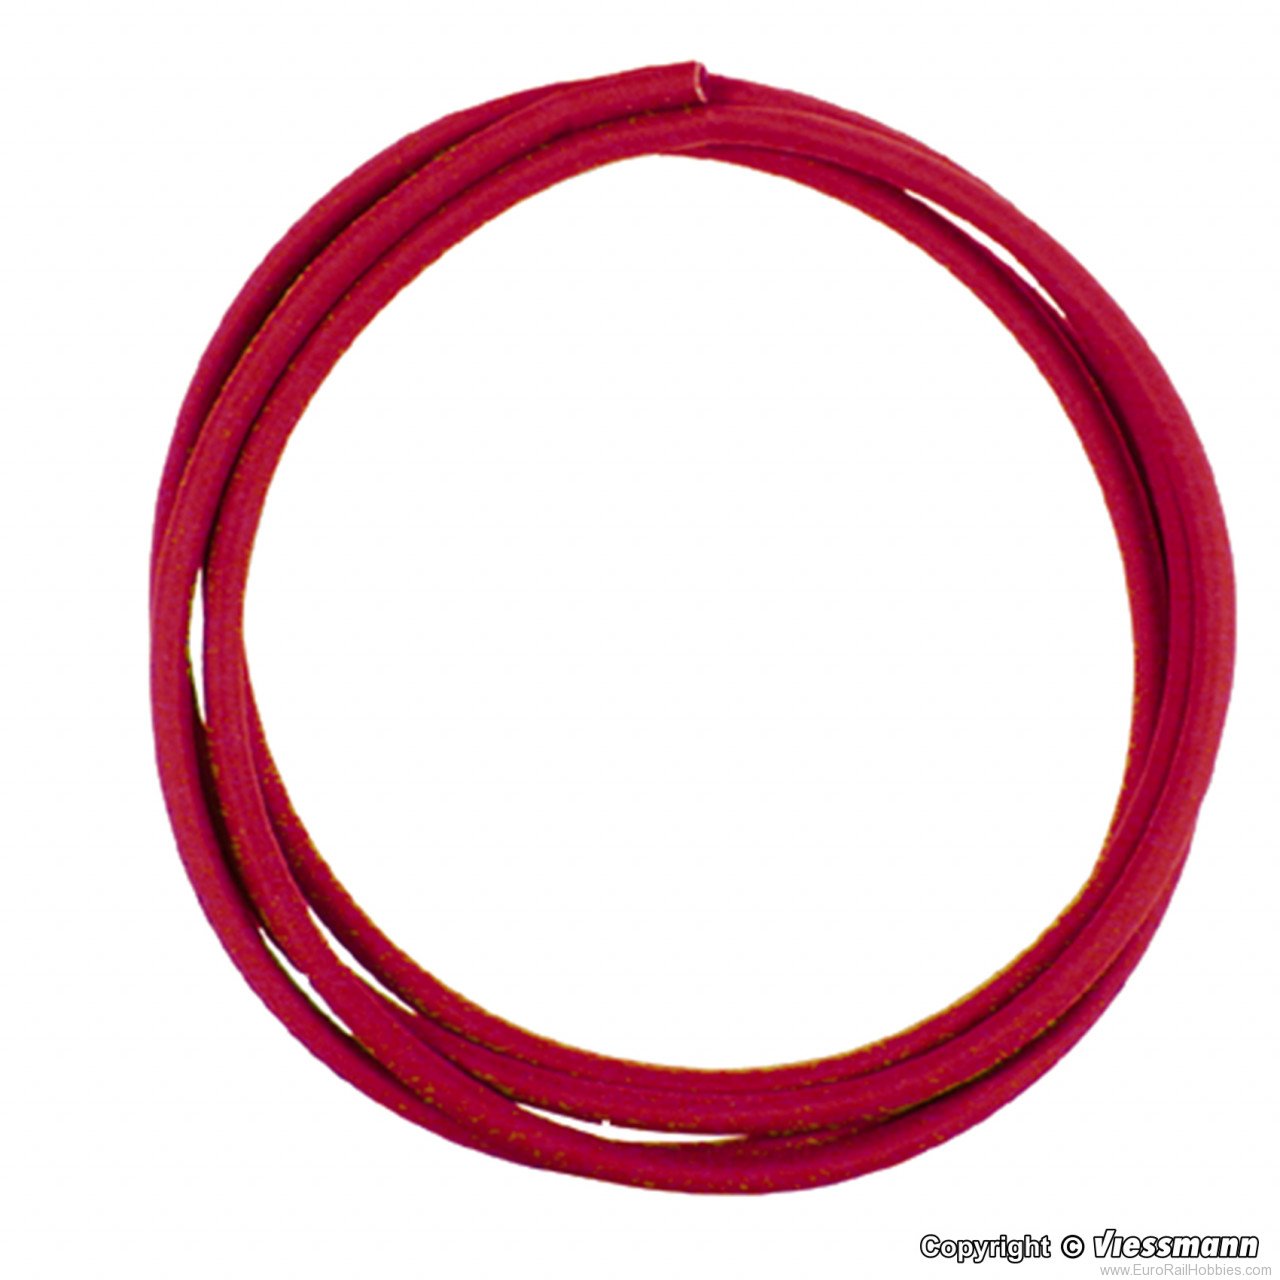 Viessmann 6818 Heat shrink tube, red, 40 cm, inside diameter